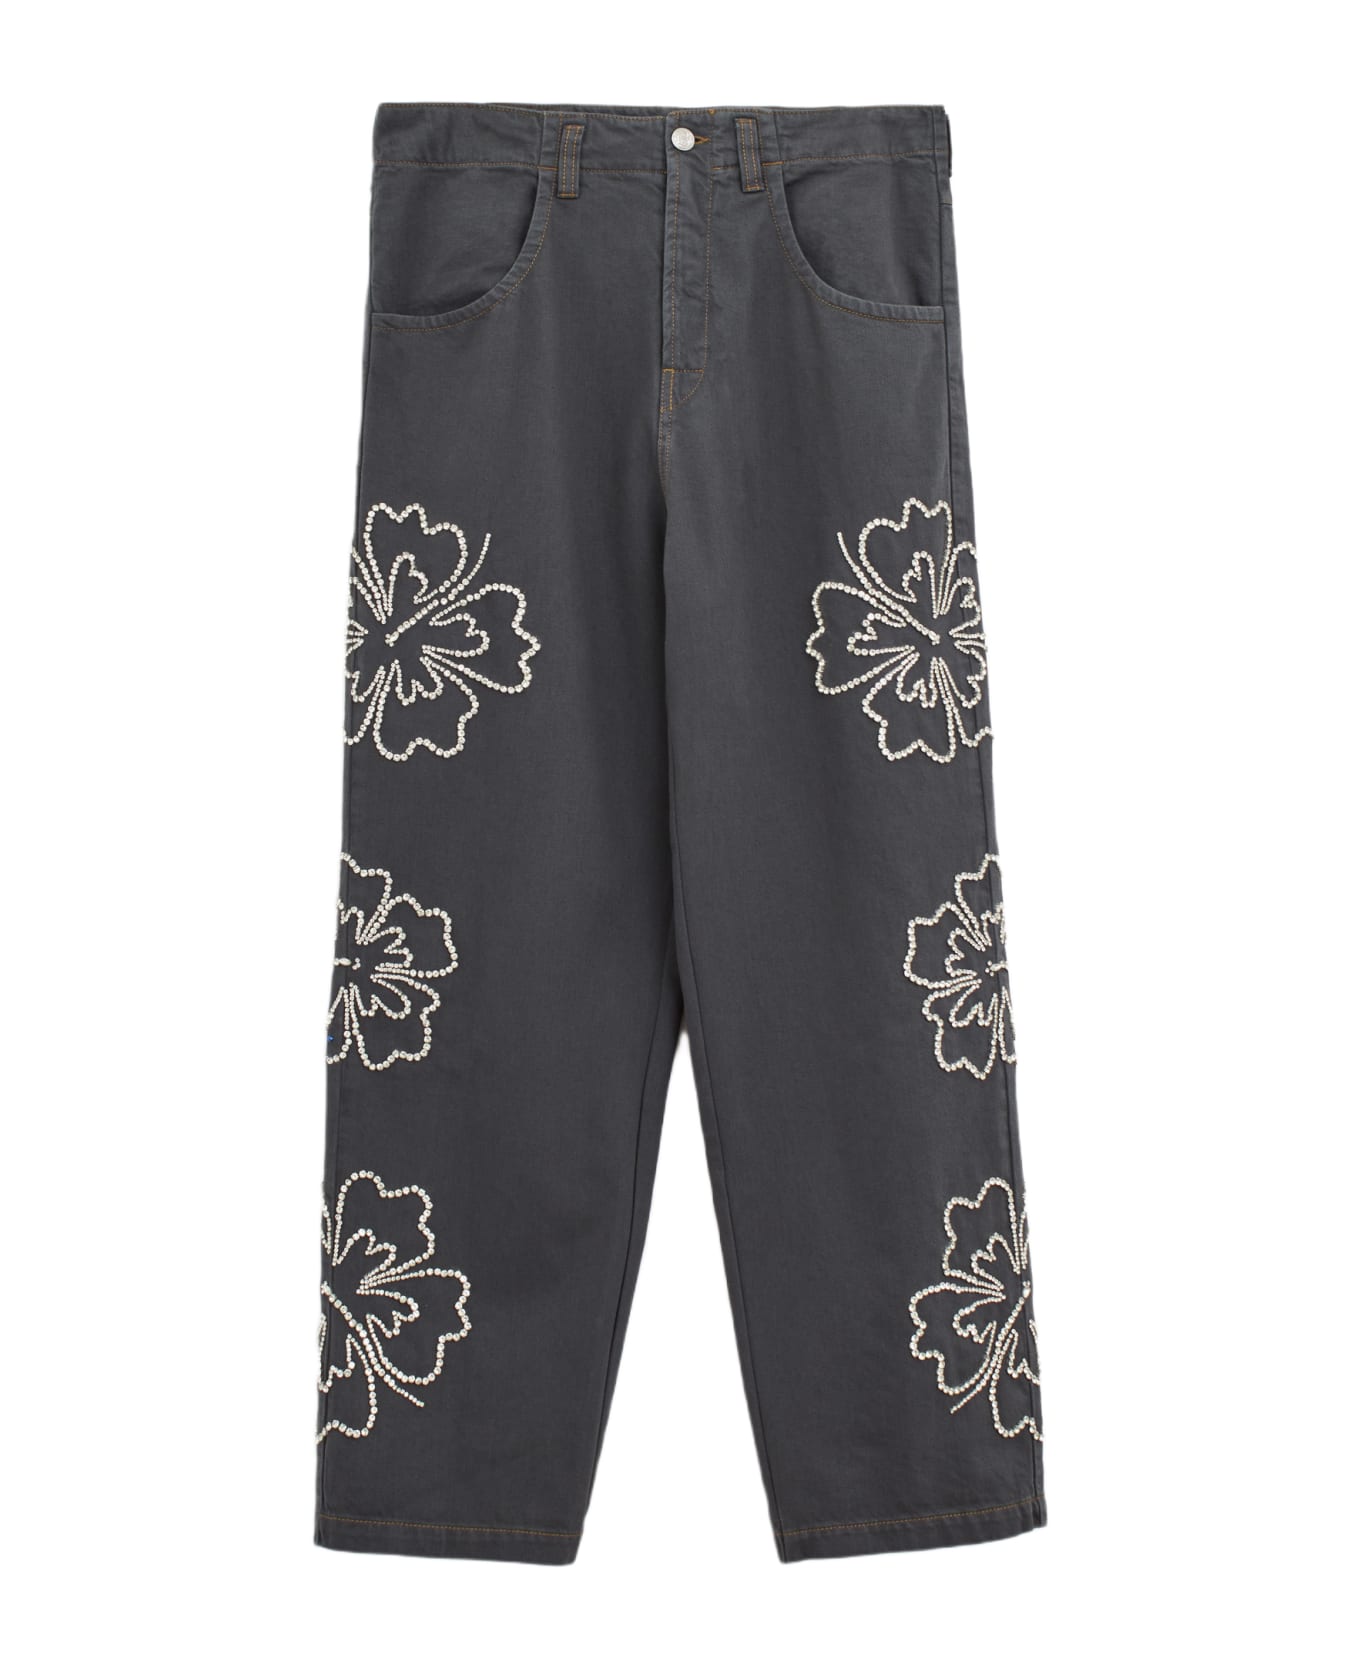 Bluemarble Hibiscus Denim Jeans - grey デニム